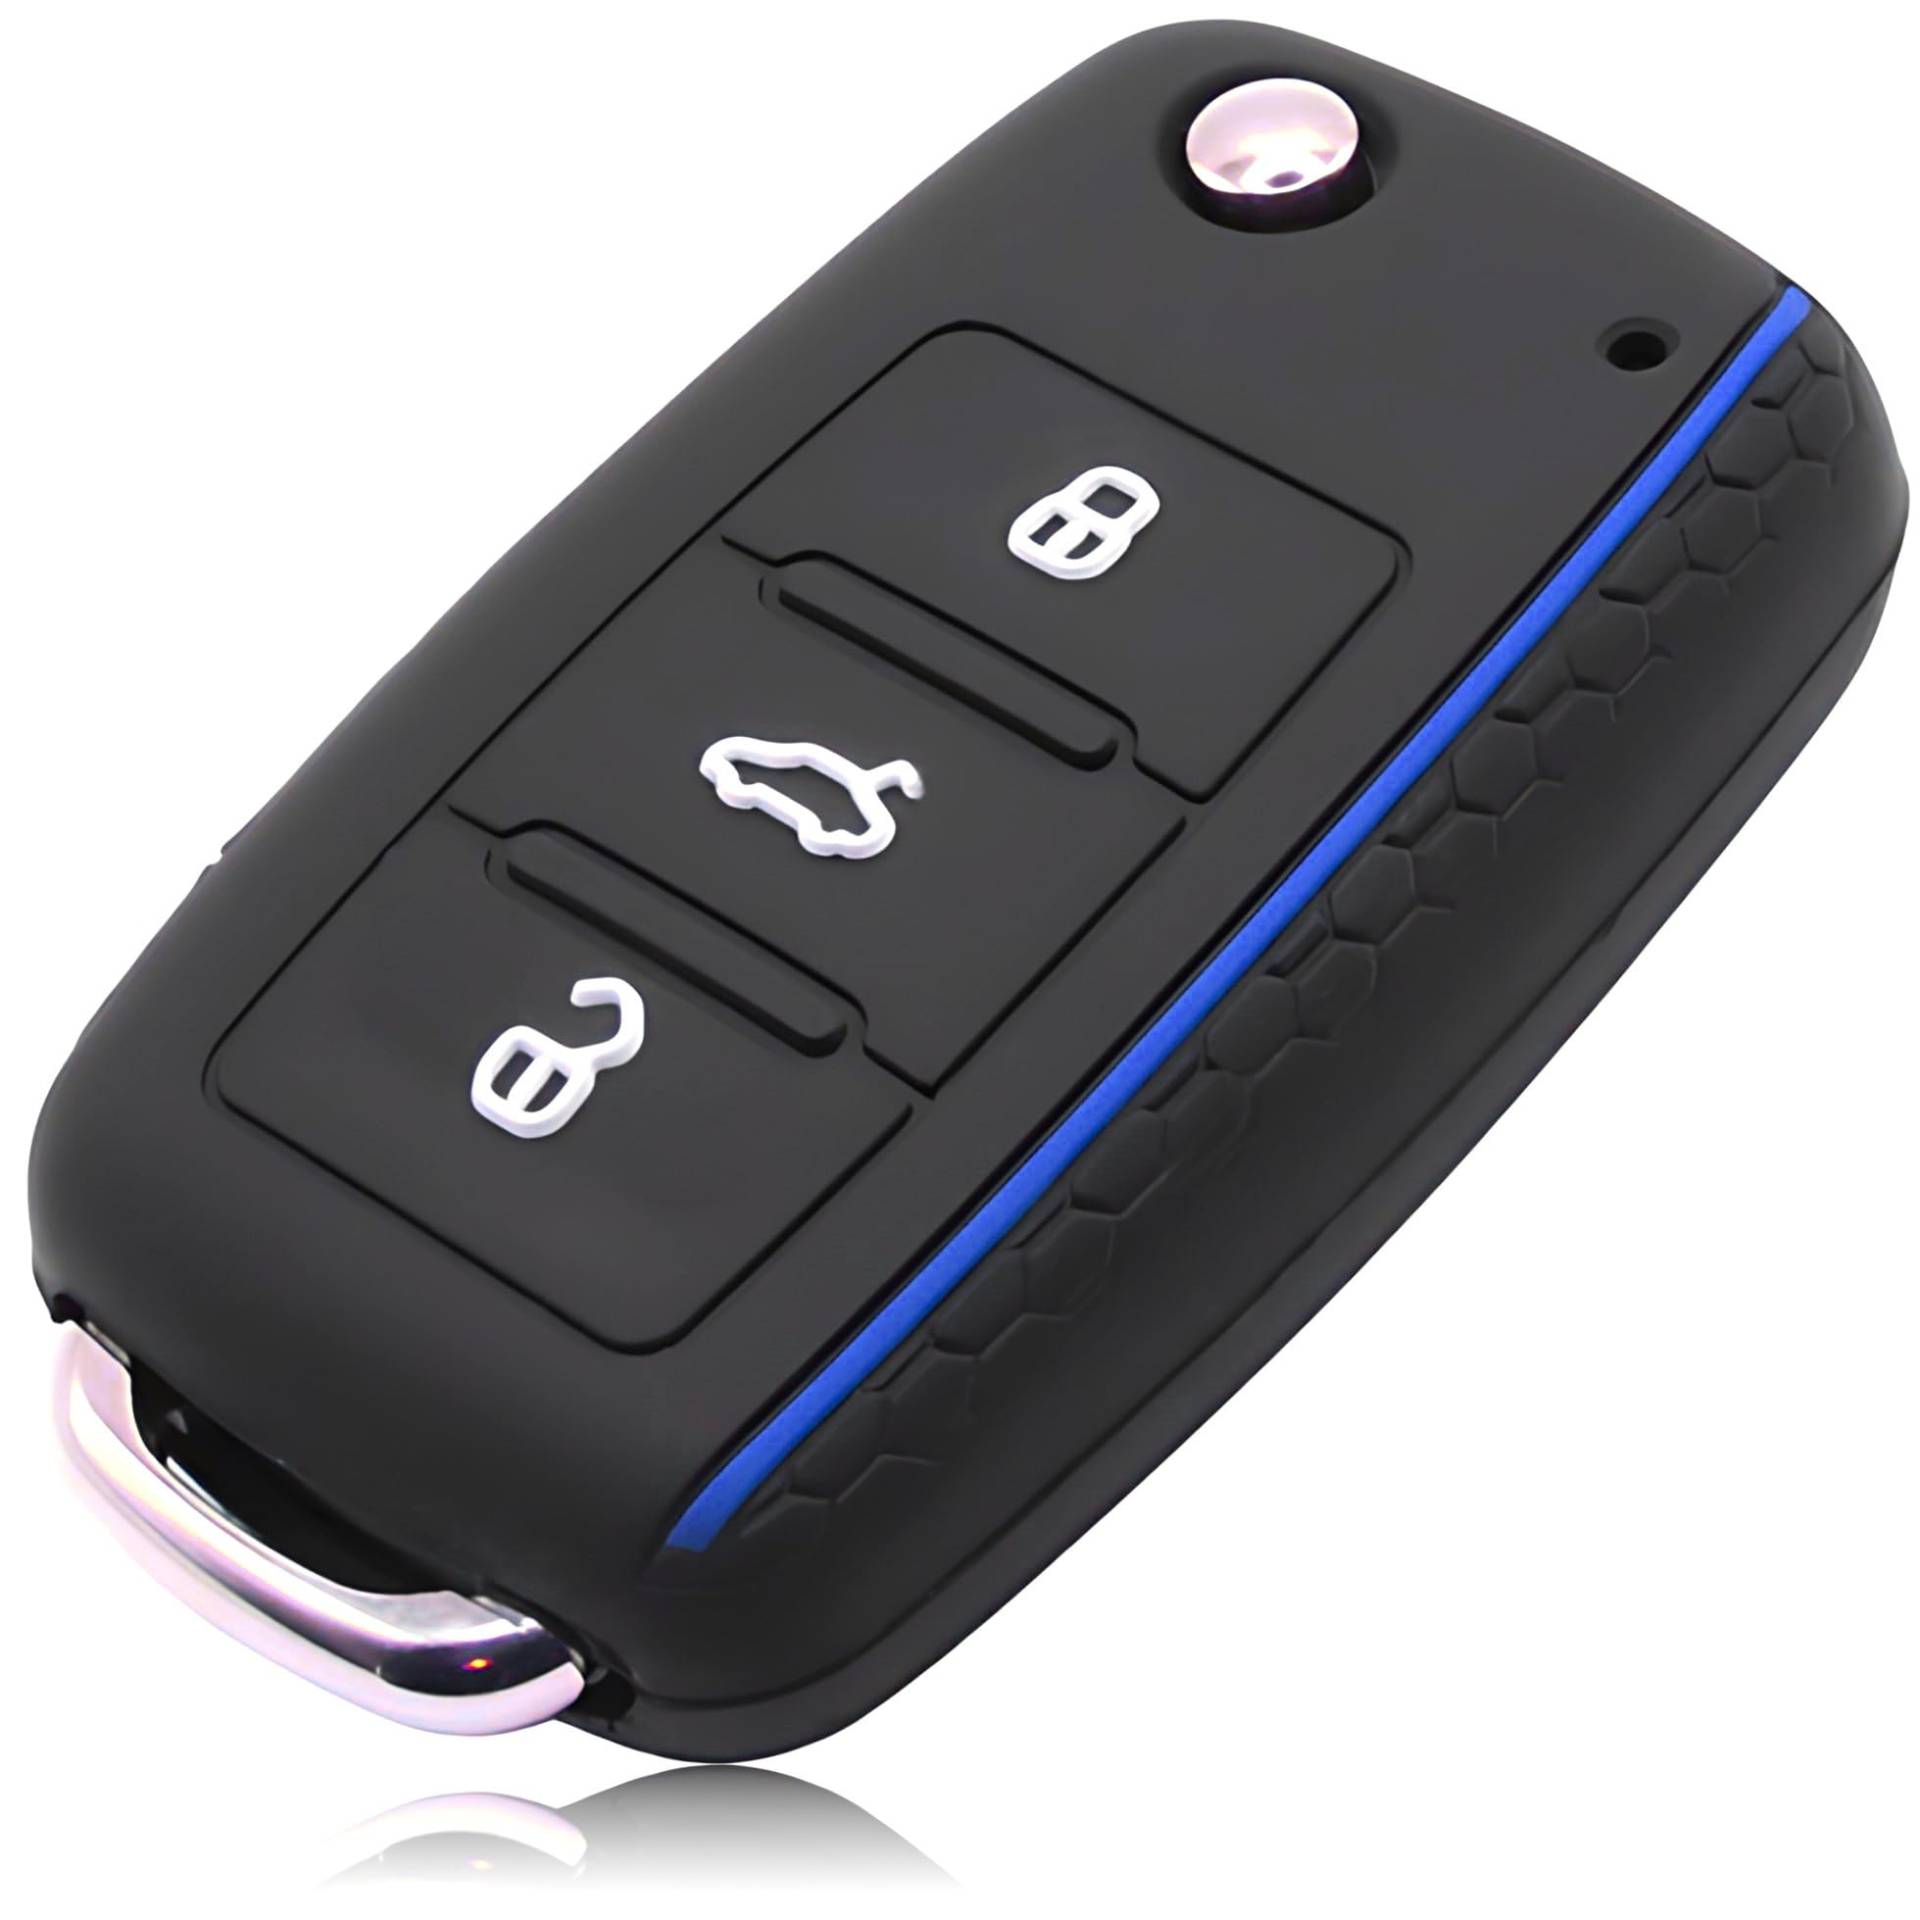 FOAMO Autoschlüssel Hülle Kompatibel mit VW Golf 6, SEAT, SKODA Autoschlüssel Silikon-Hülle Schlüssel-Hülle Schutz-Hülle für Autoschlüssel Schwarz Blau von FOAMO